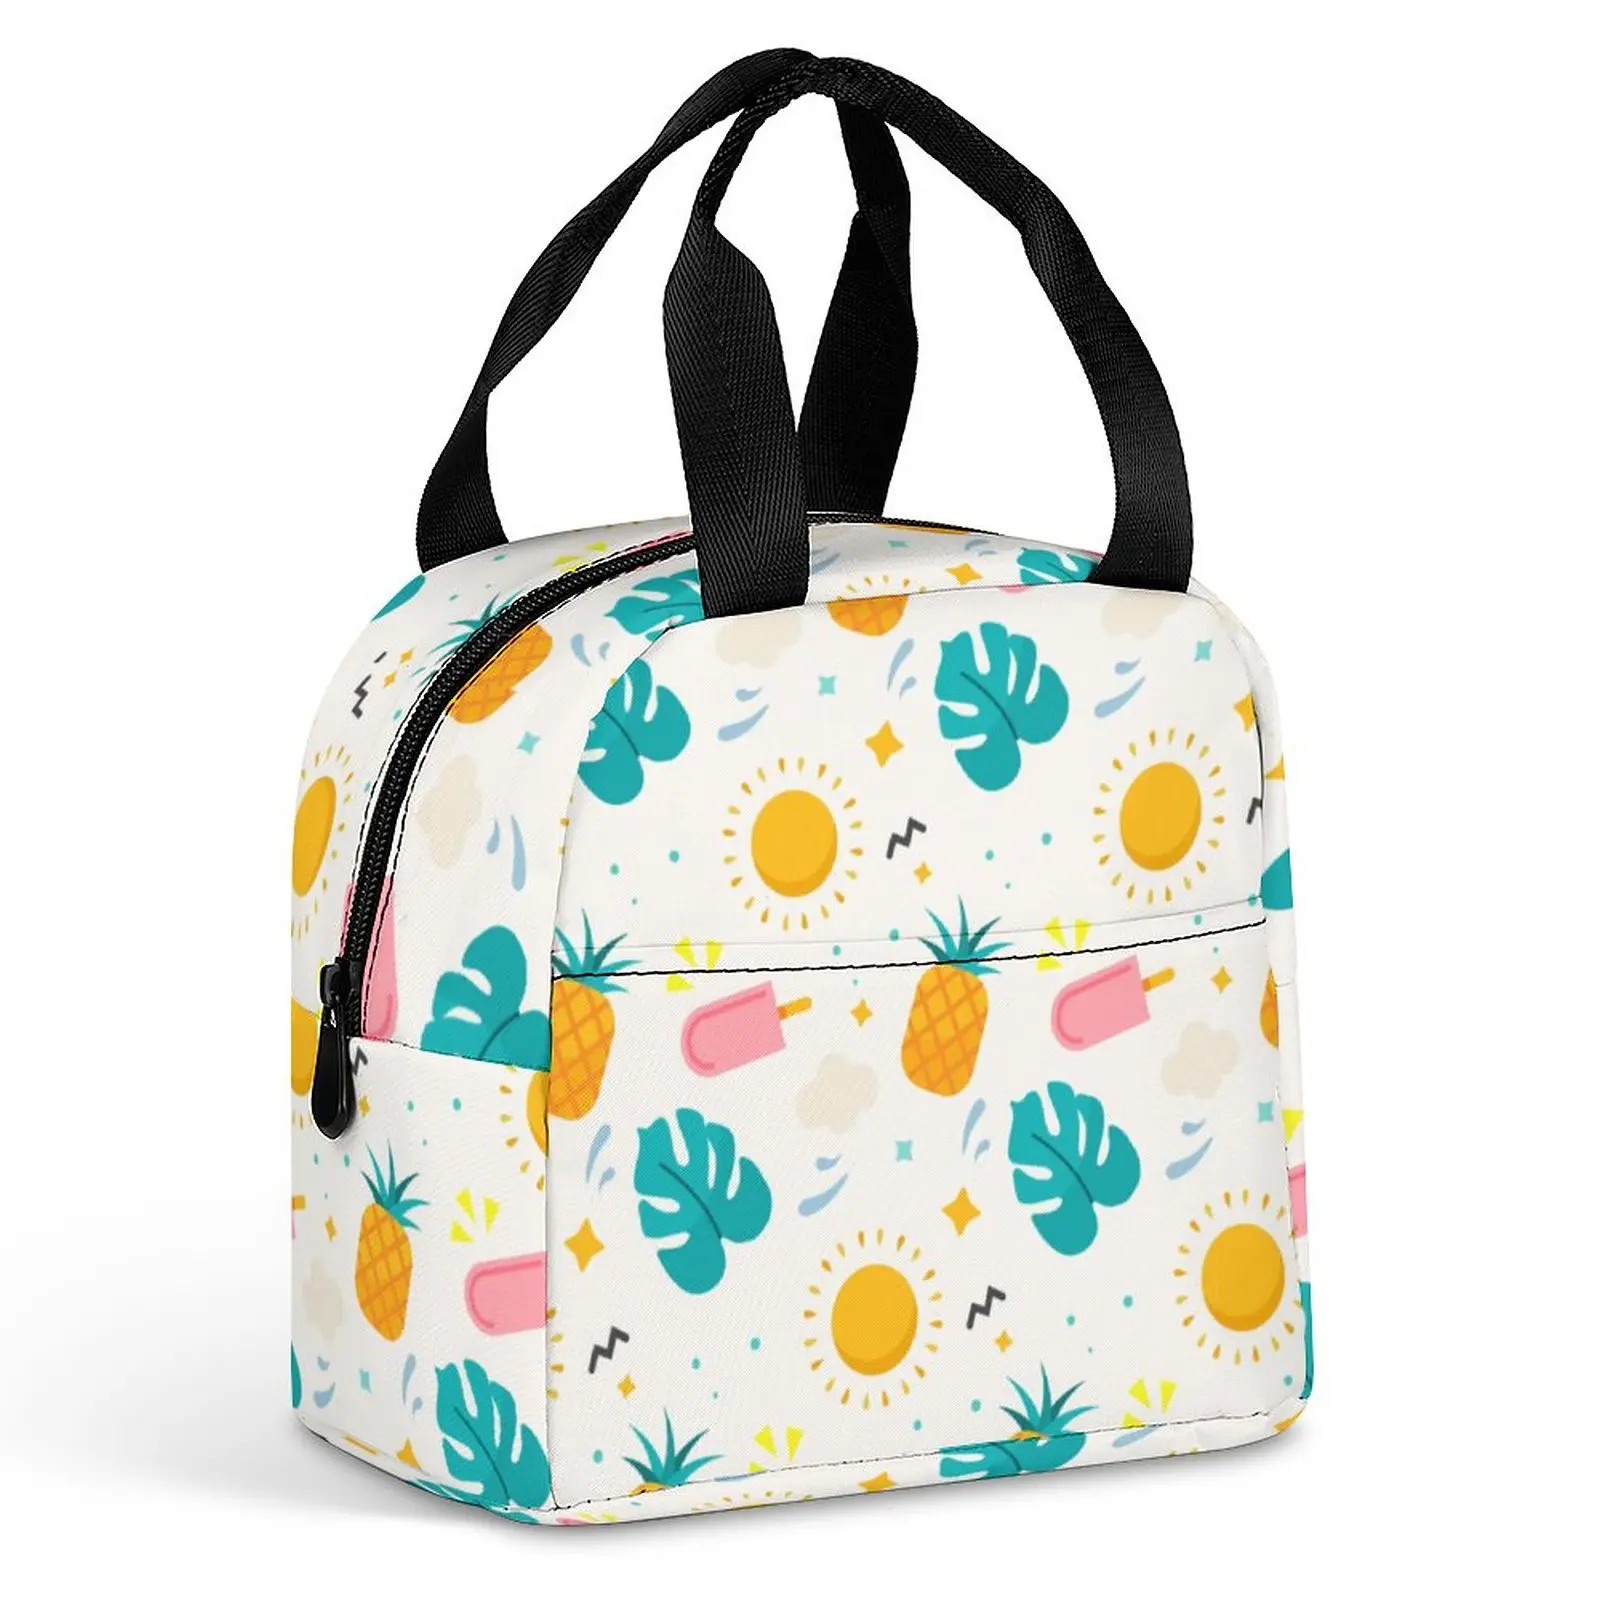 Custom Pattern Tote Lunch Bags for Women Summer Heat Print Portable Meal Bag Picnic Travel Breakfast Box Office Work School